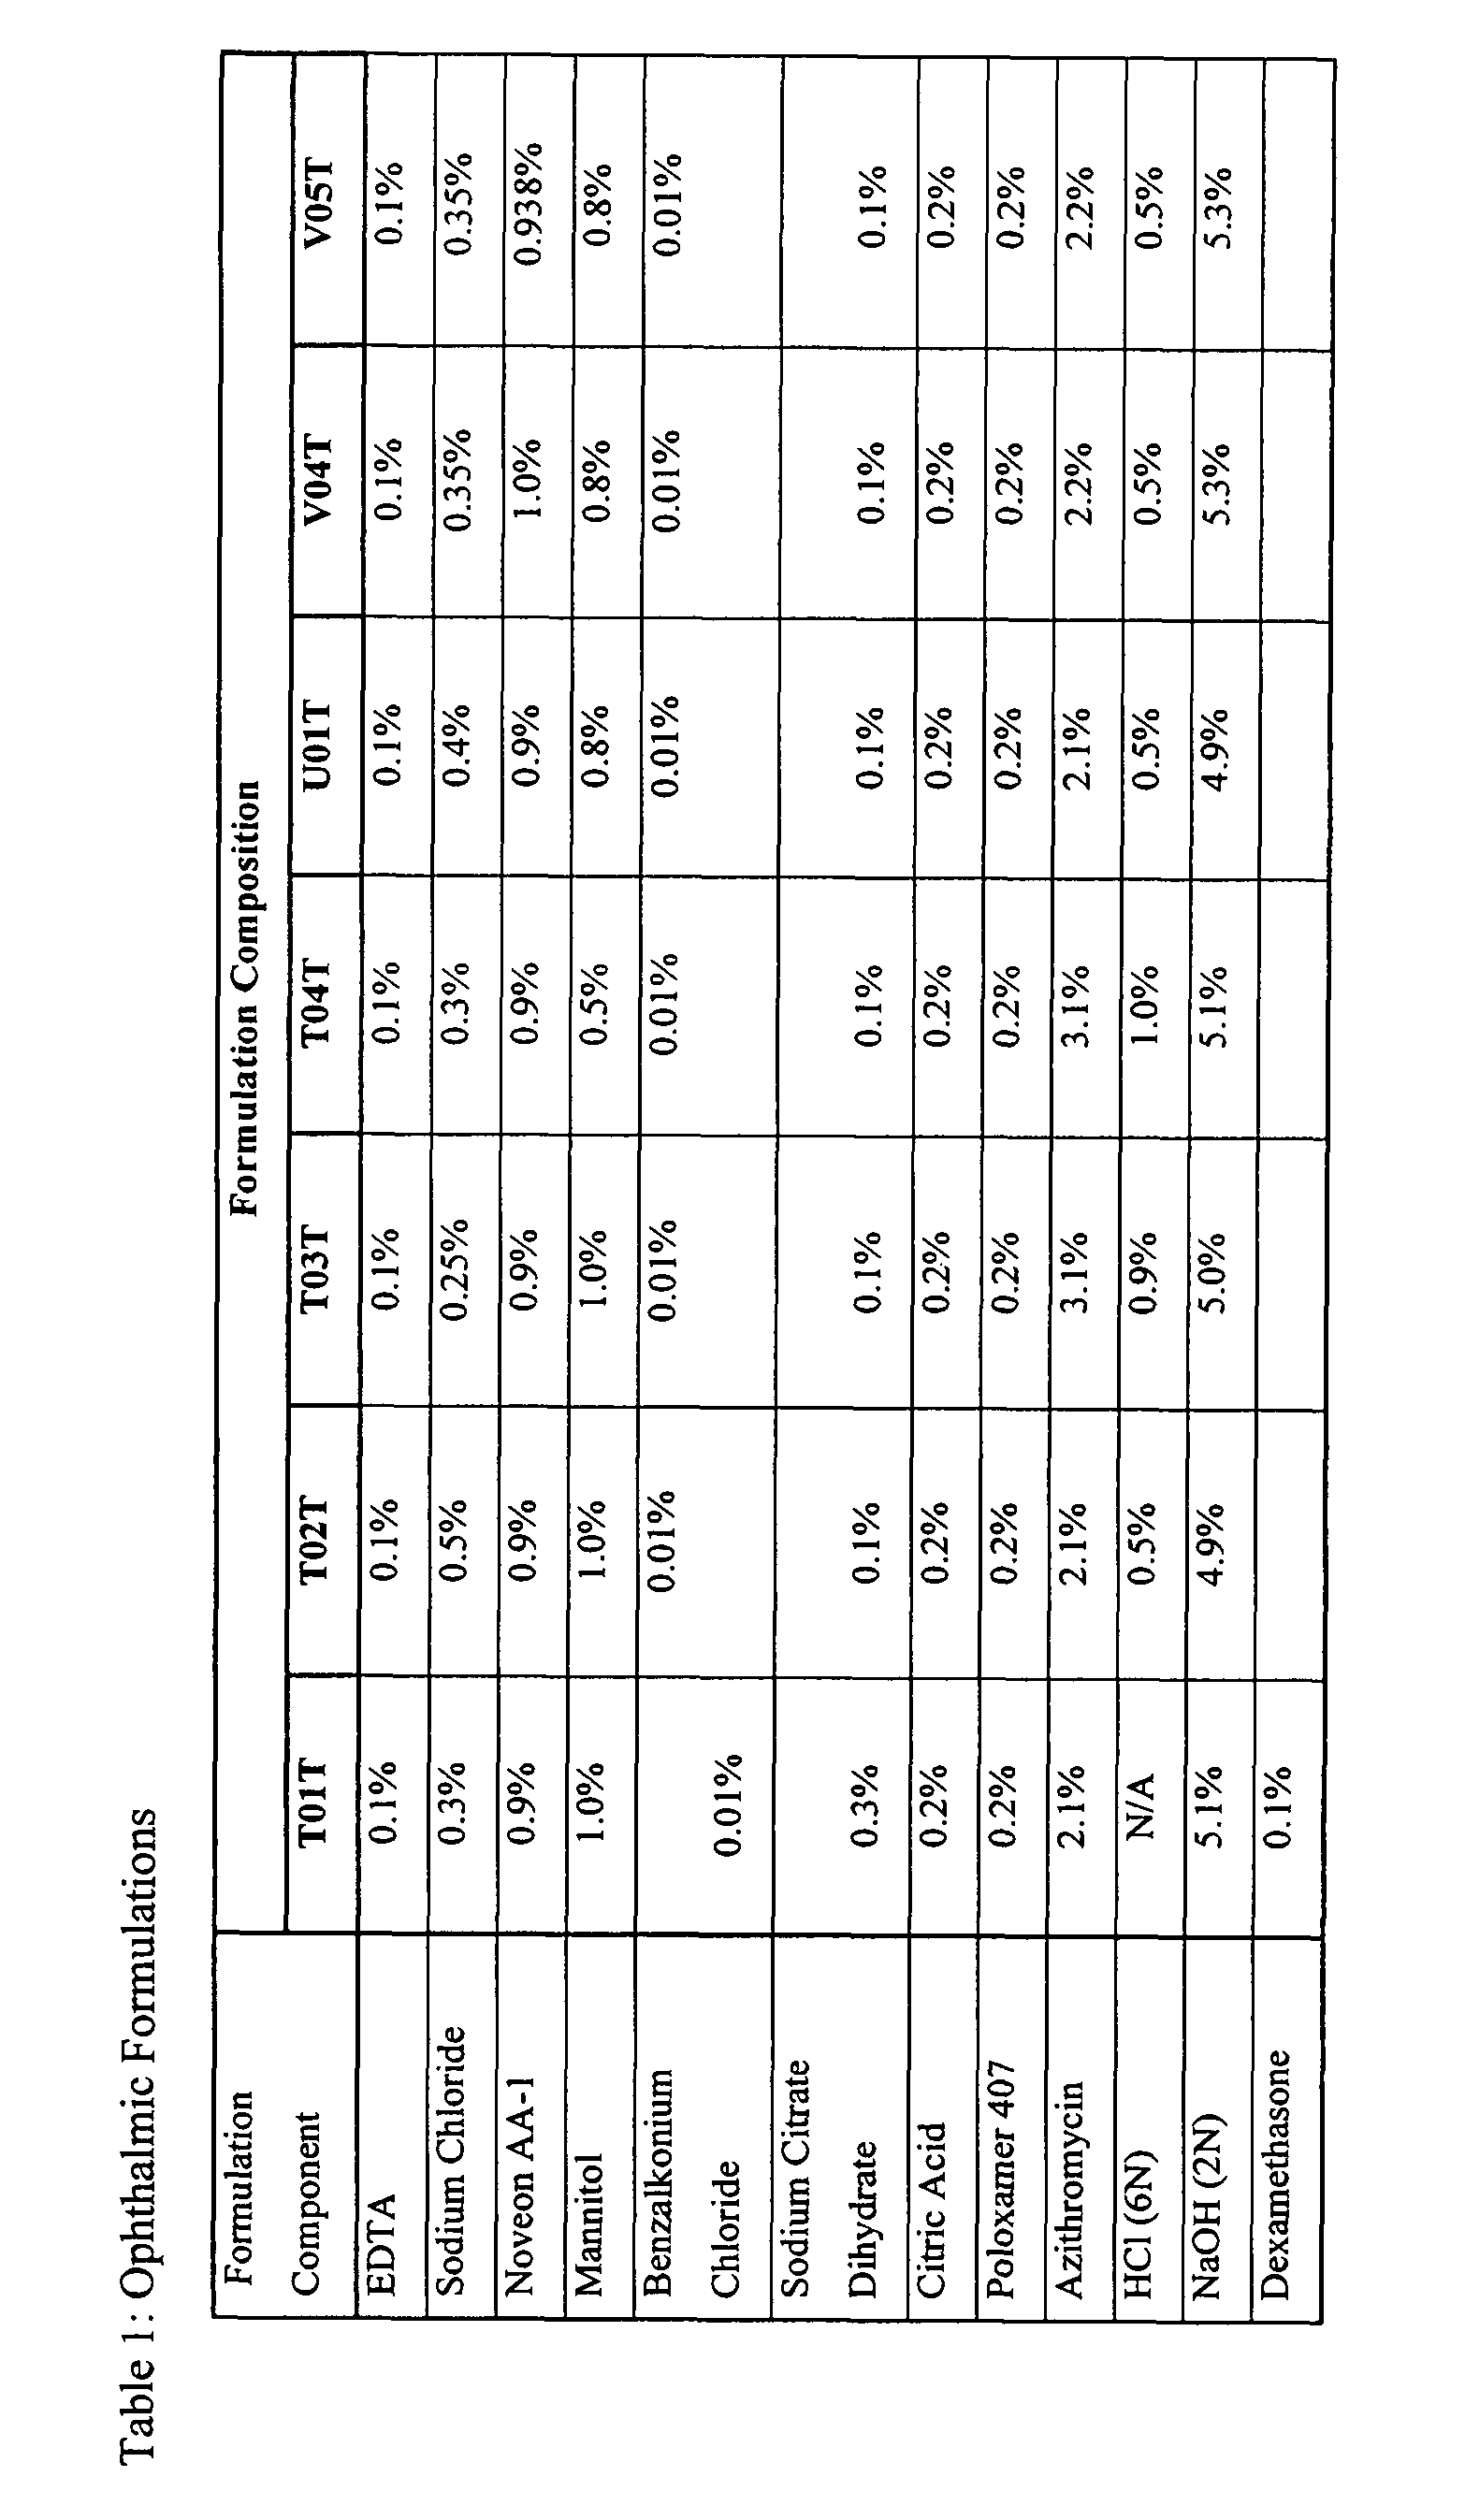 Concentrated aqueous azalide formulations